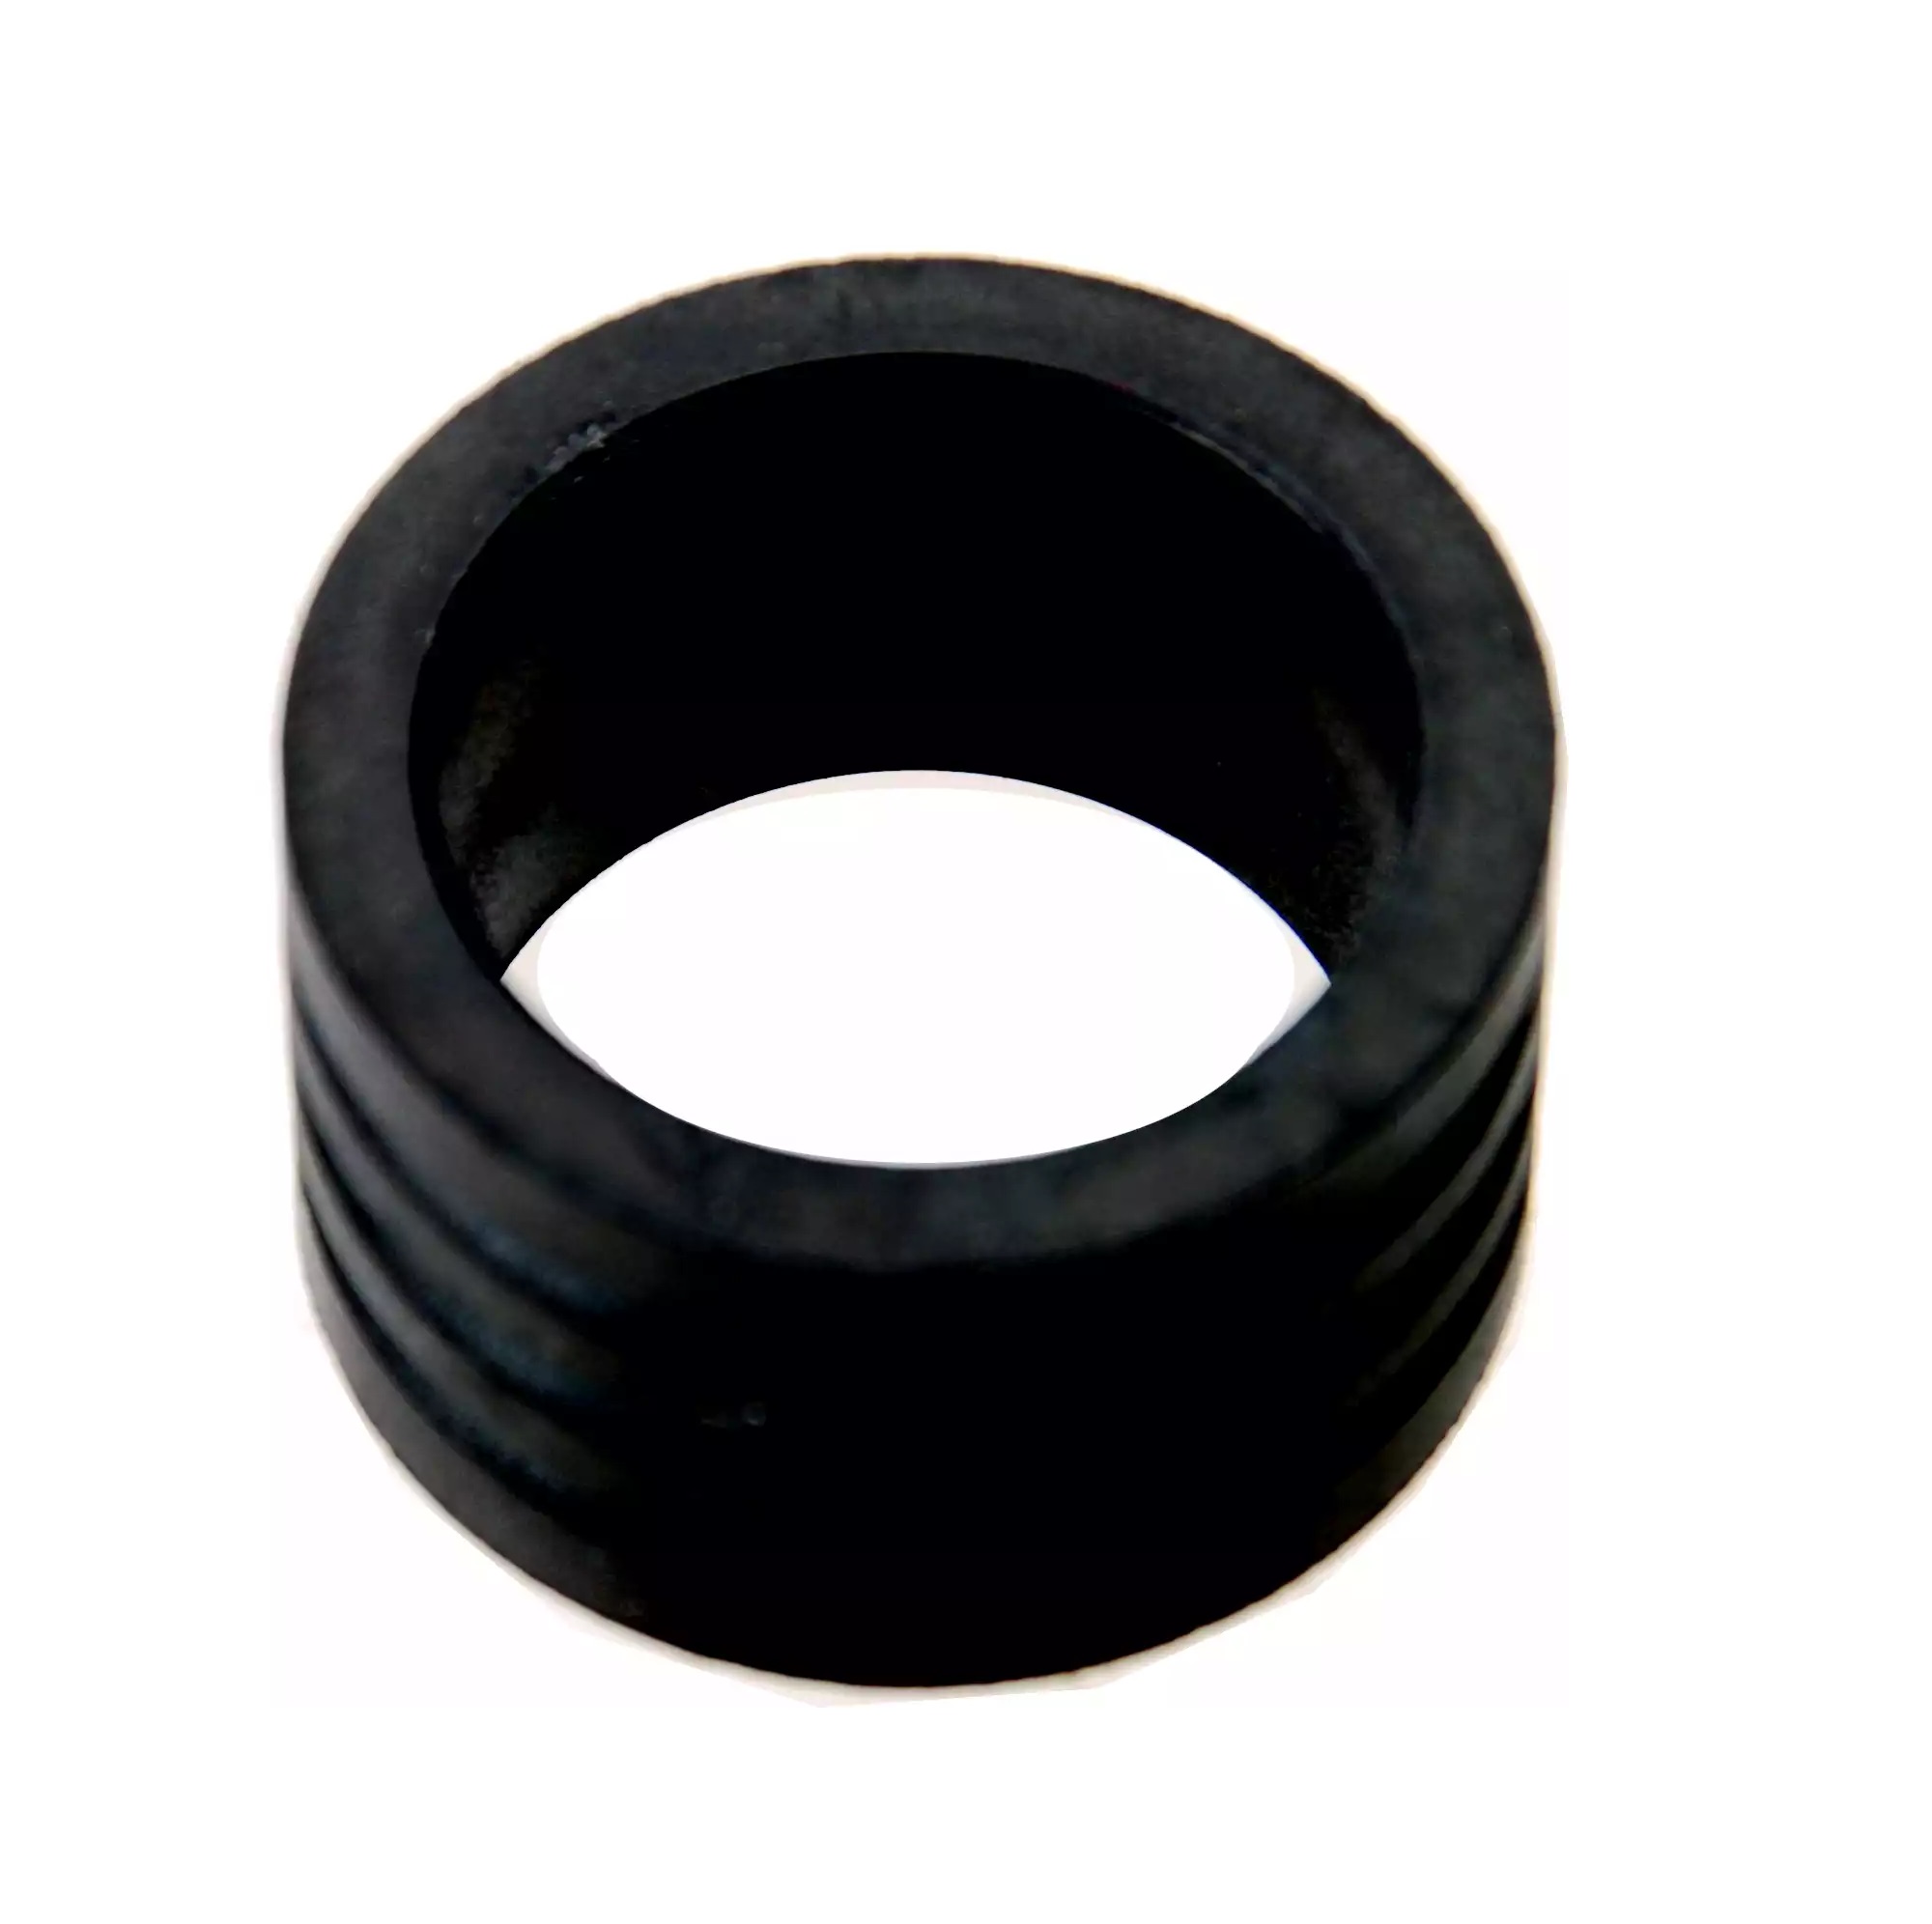 Krúžok gumový 40-45 mm, zo sady BGS kat. č. 108599